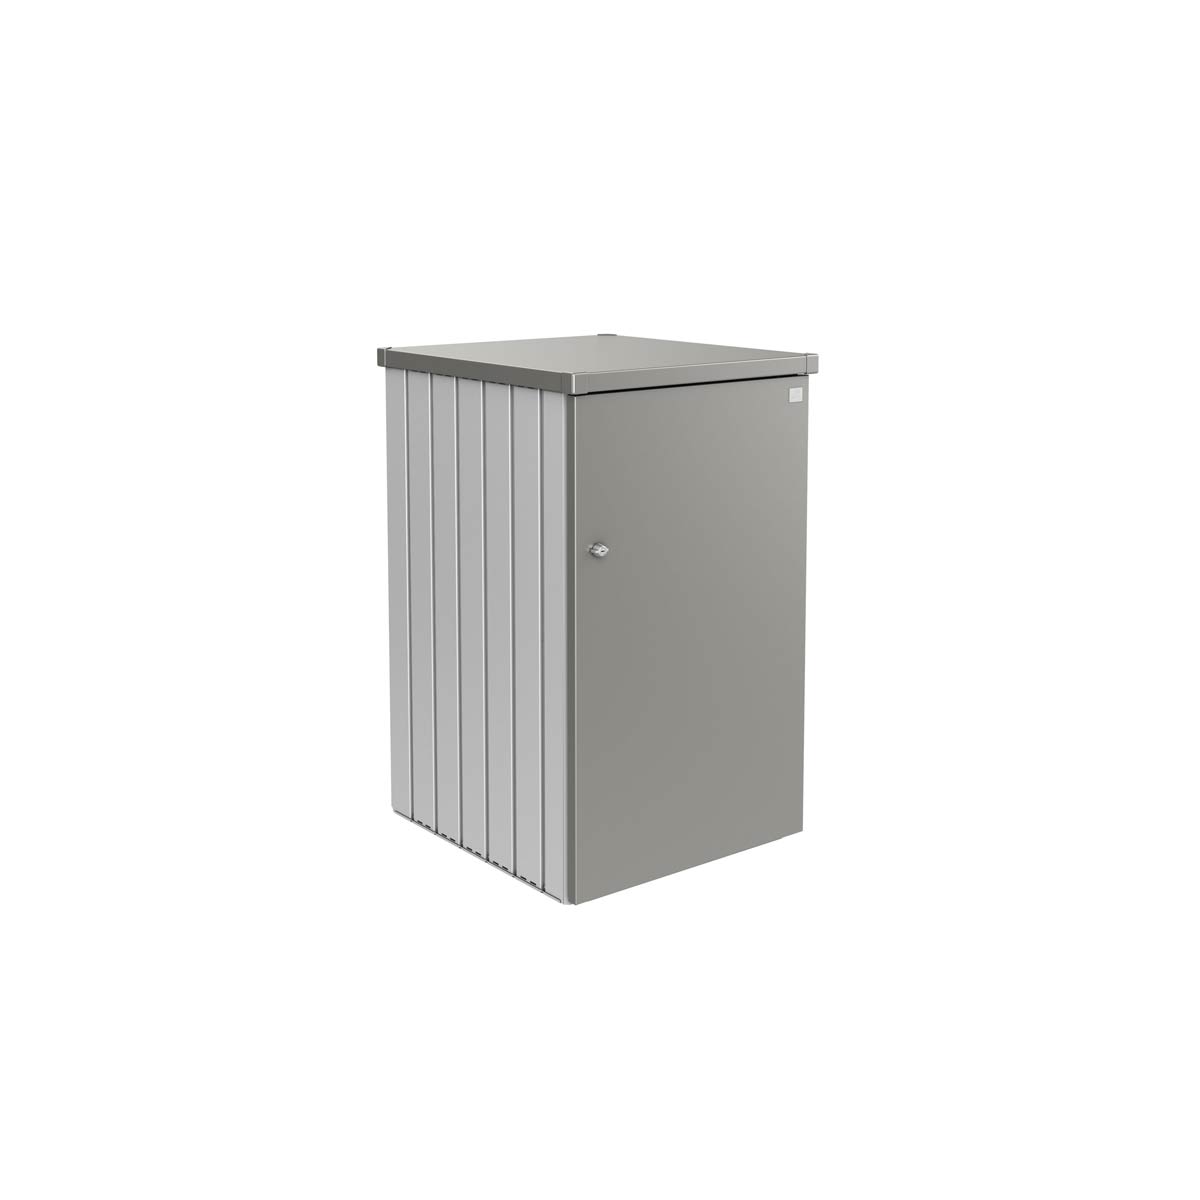 Biohort Wheelie Bin Storage Box Alex 1.2 In Metallic Silver With Metallic Quartz Grey Door And Roof